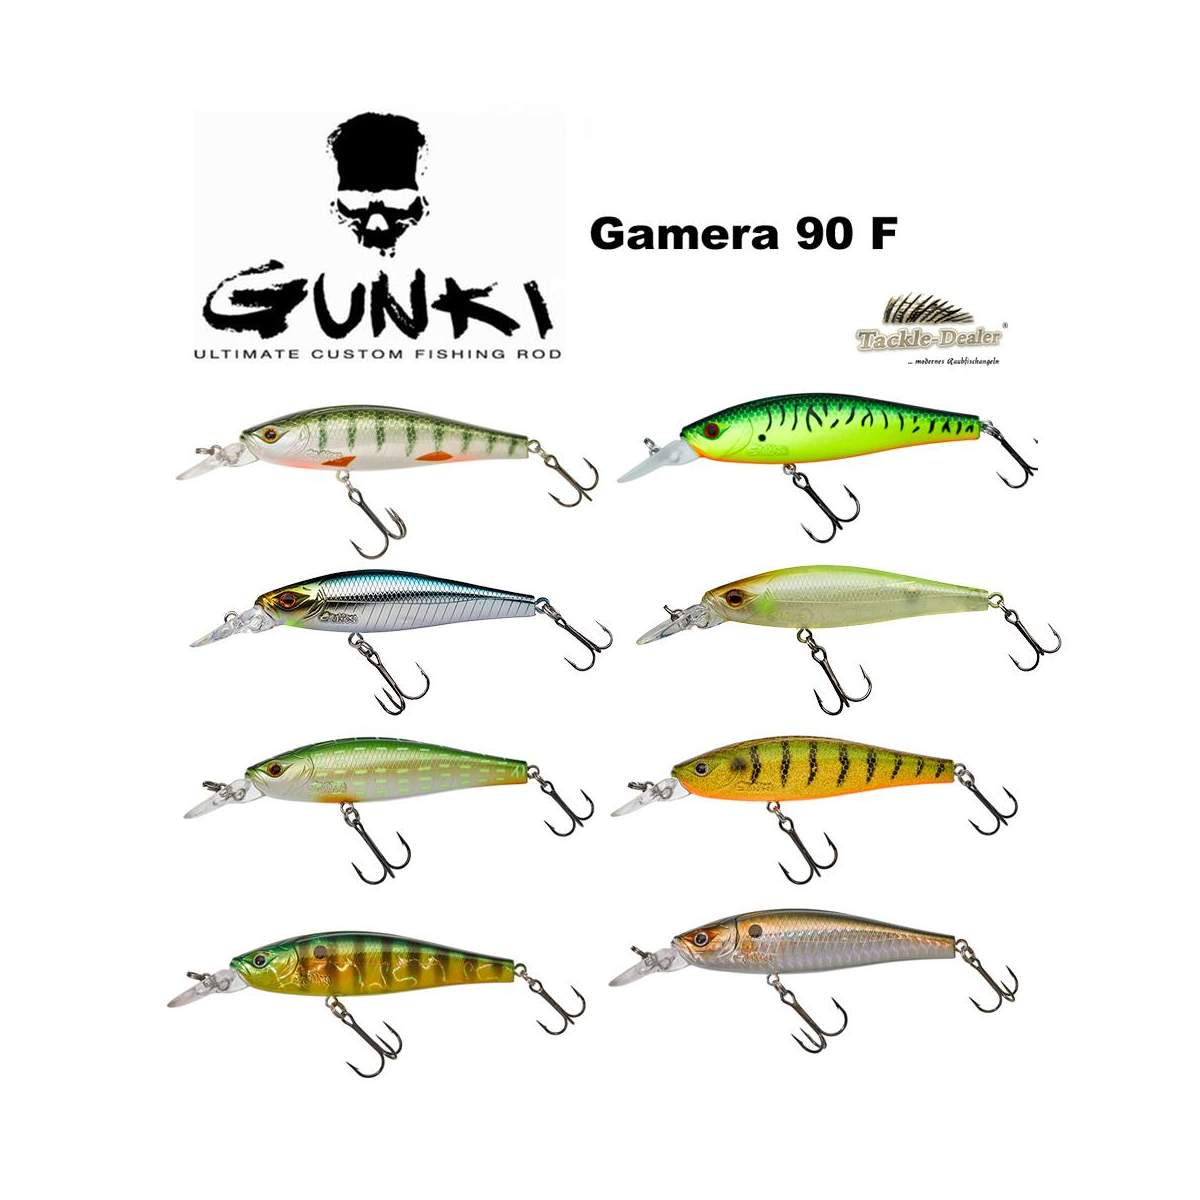 Gunki Gamera 90 F UV White Wobbler 